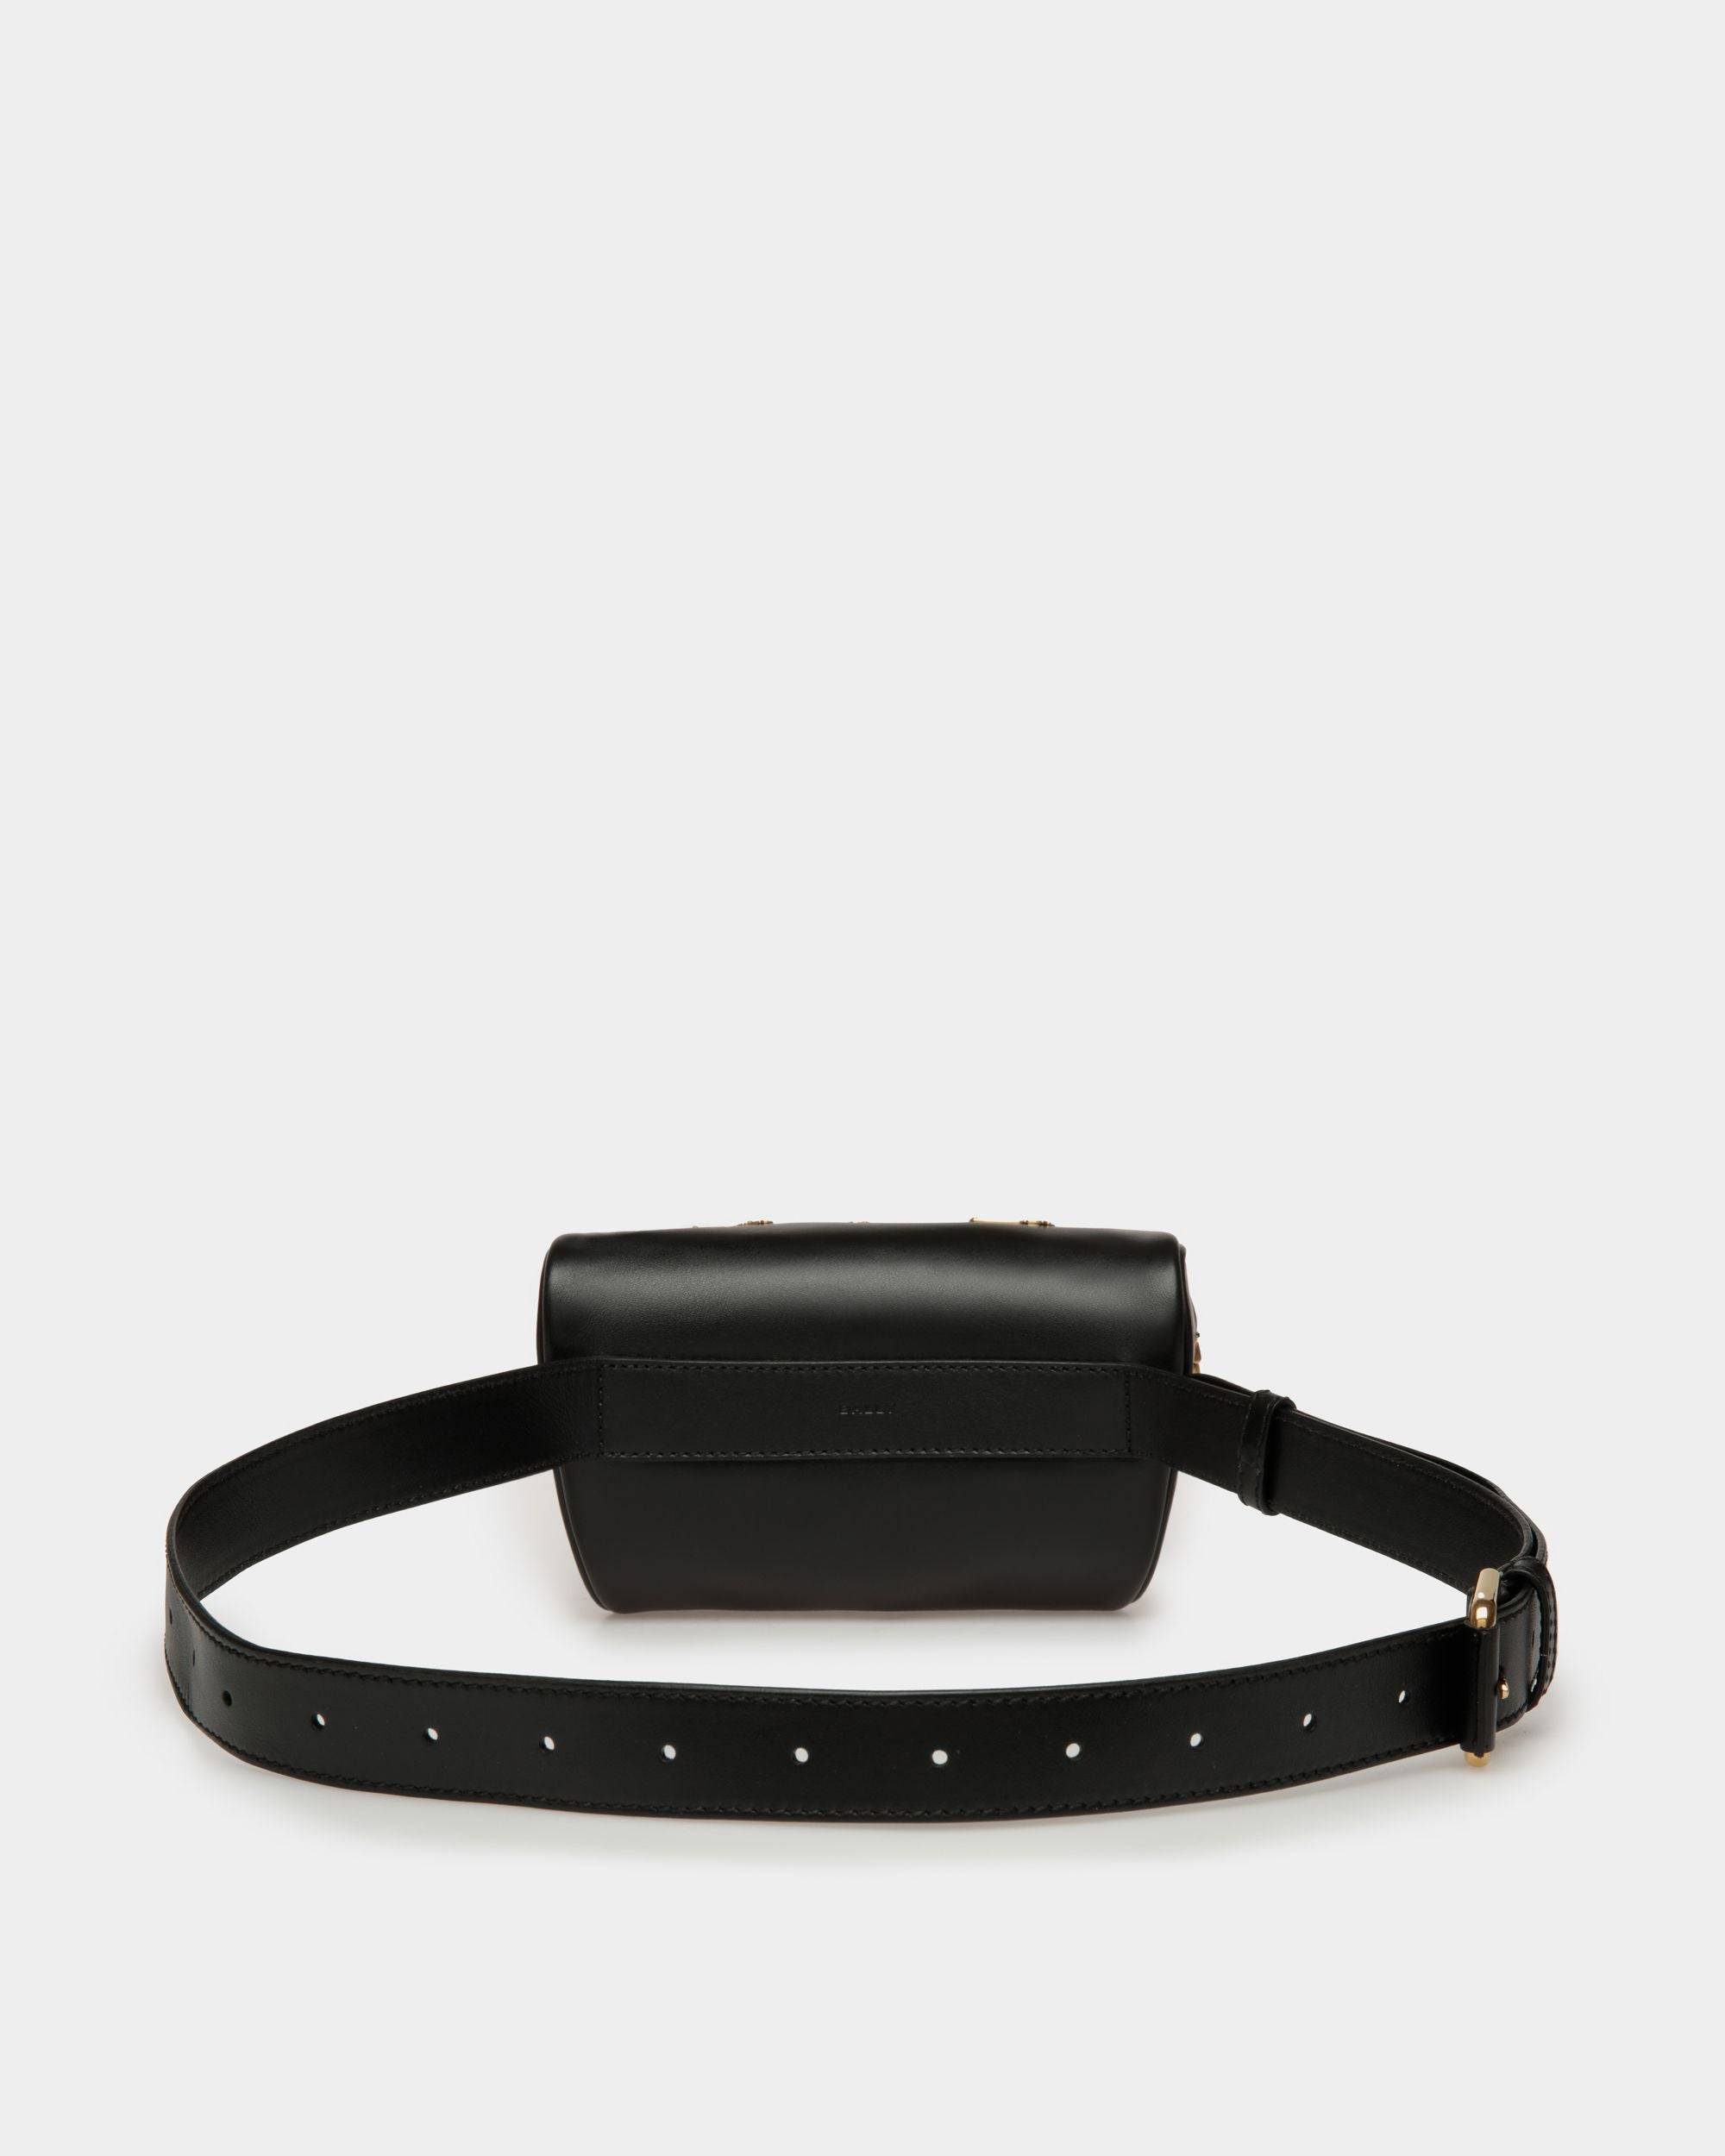 Moutain | Women's Belt Bag  in Black Leather | Bally | Still Life Back